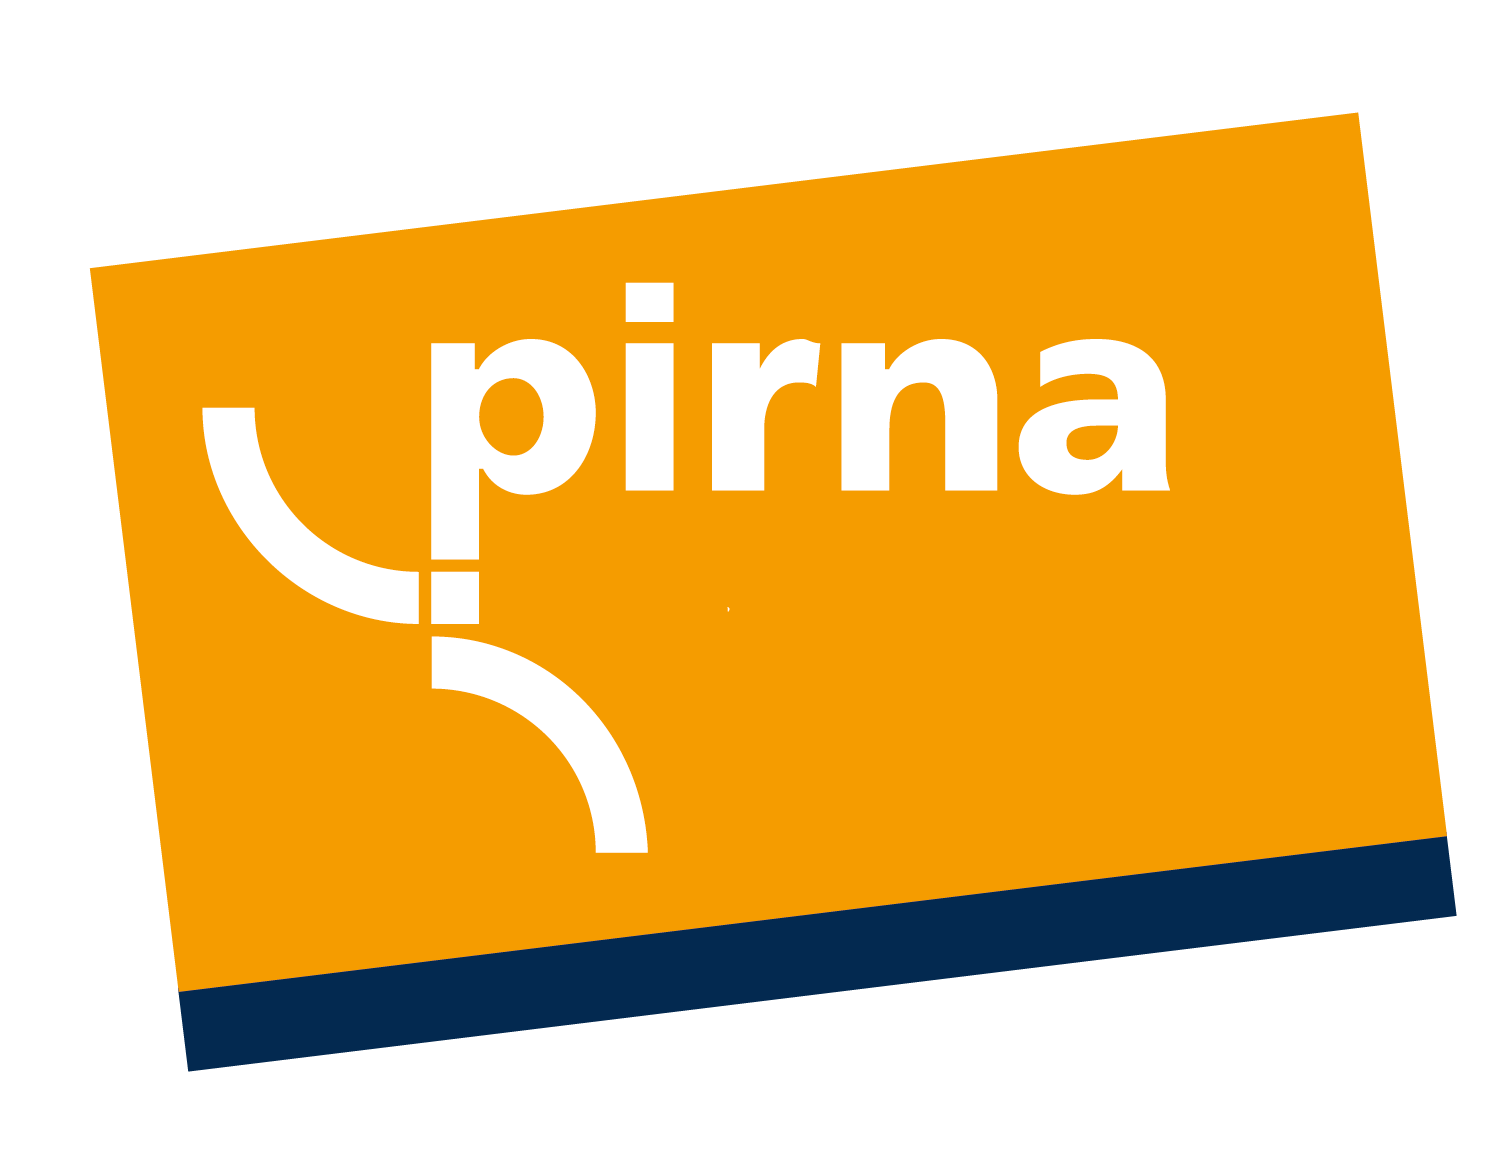 Stadt Pirna